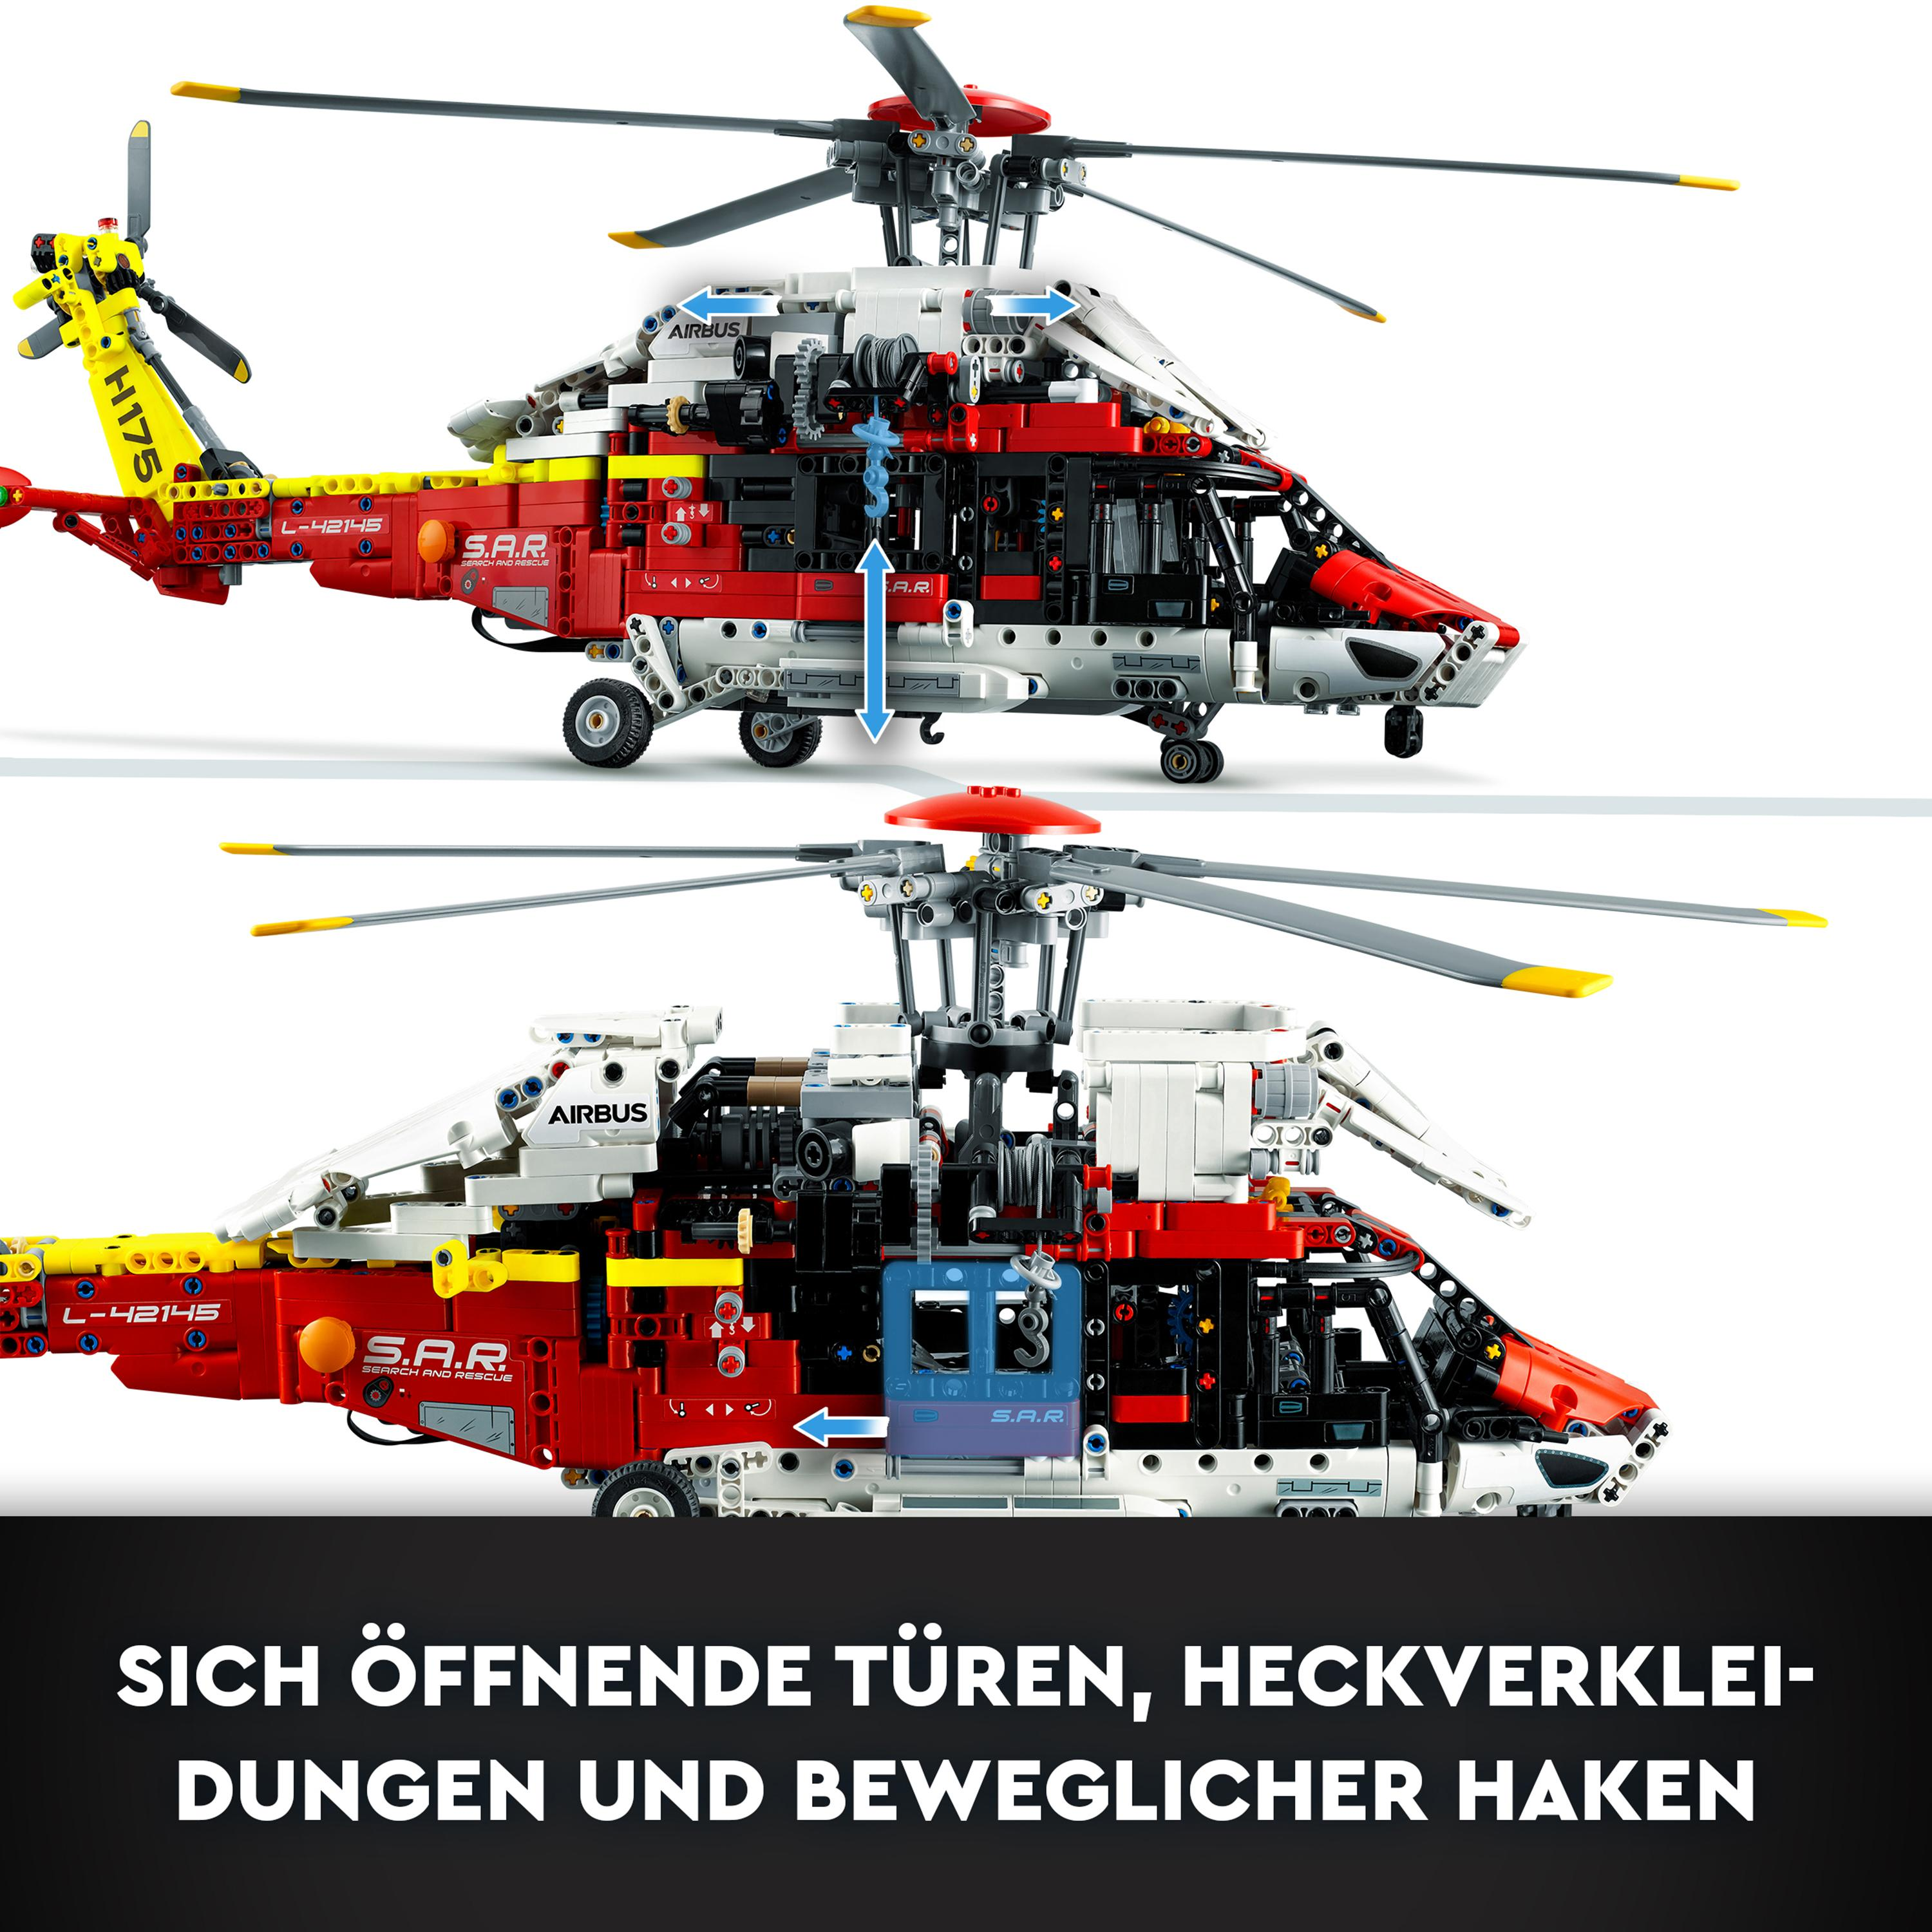 Bausatz, Technic H175 Airbus LEGO Rettungshubschrauber 42145 Mehrfarbig